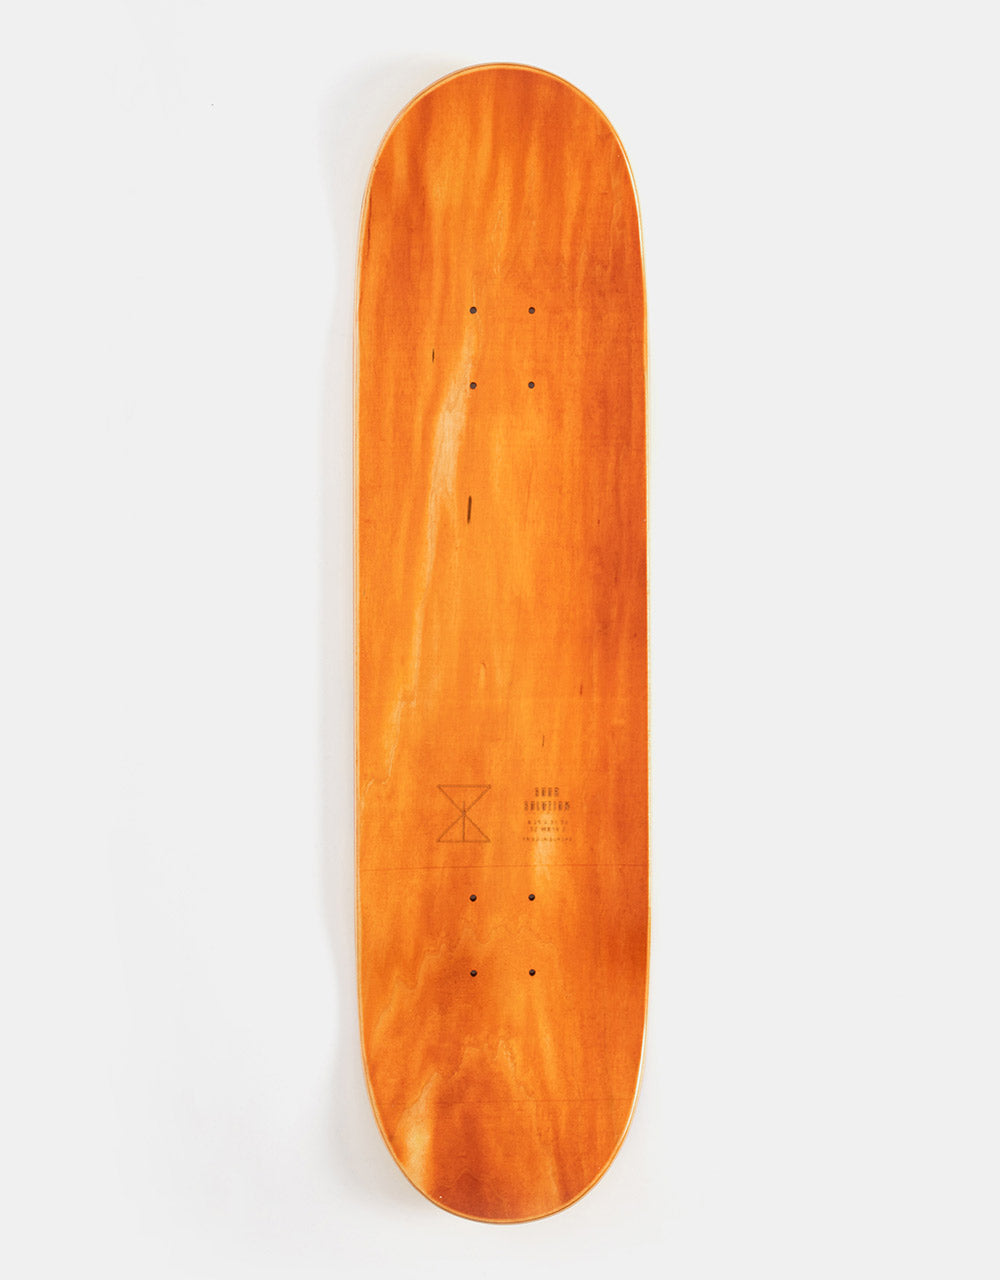 Sour Solution Martin Sandberg Skateboard Deck - 8.25"